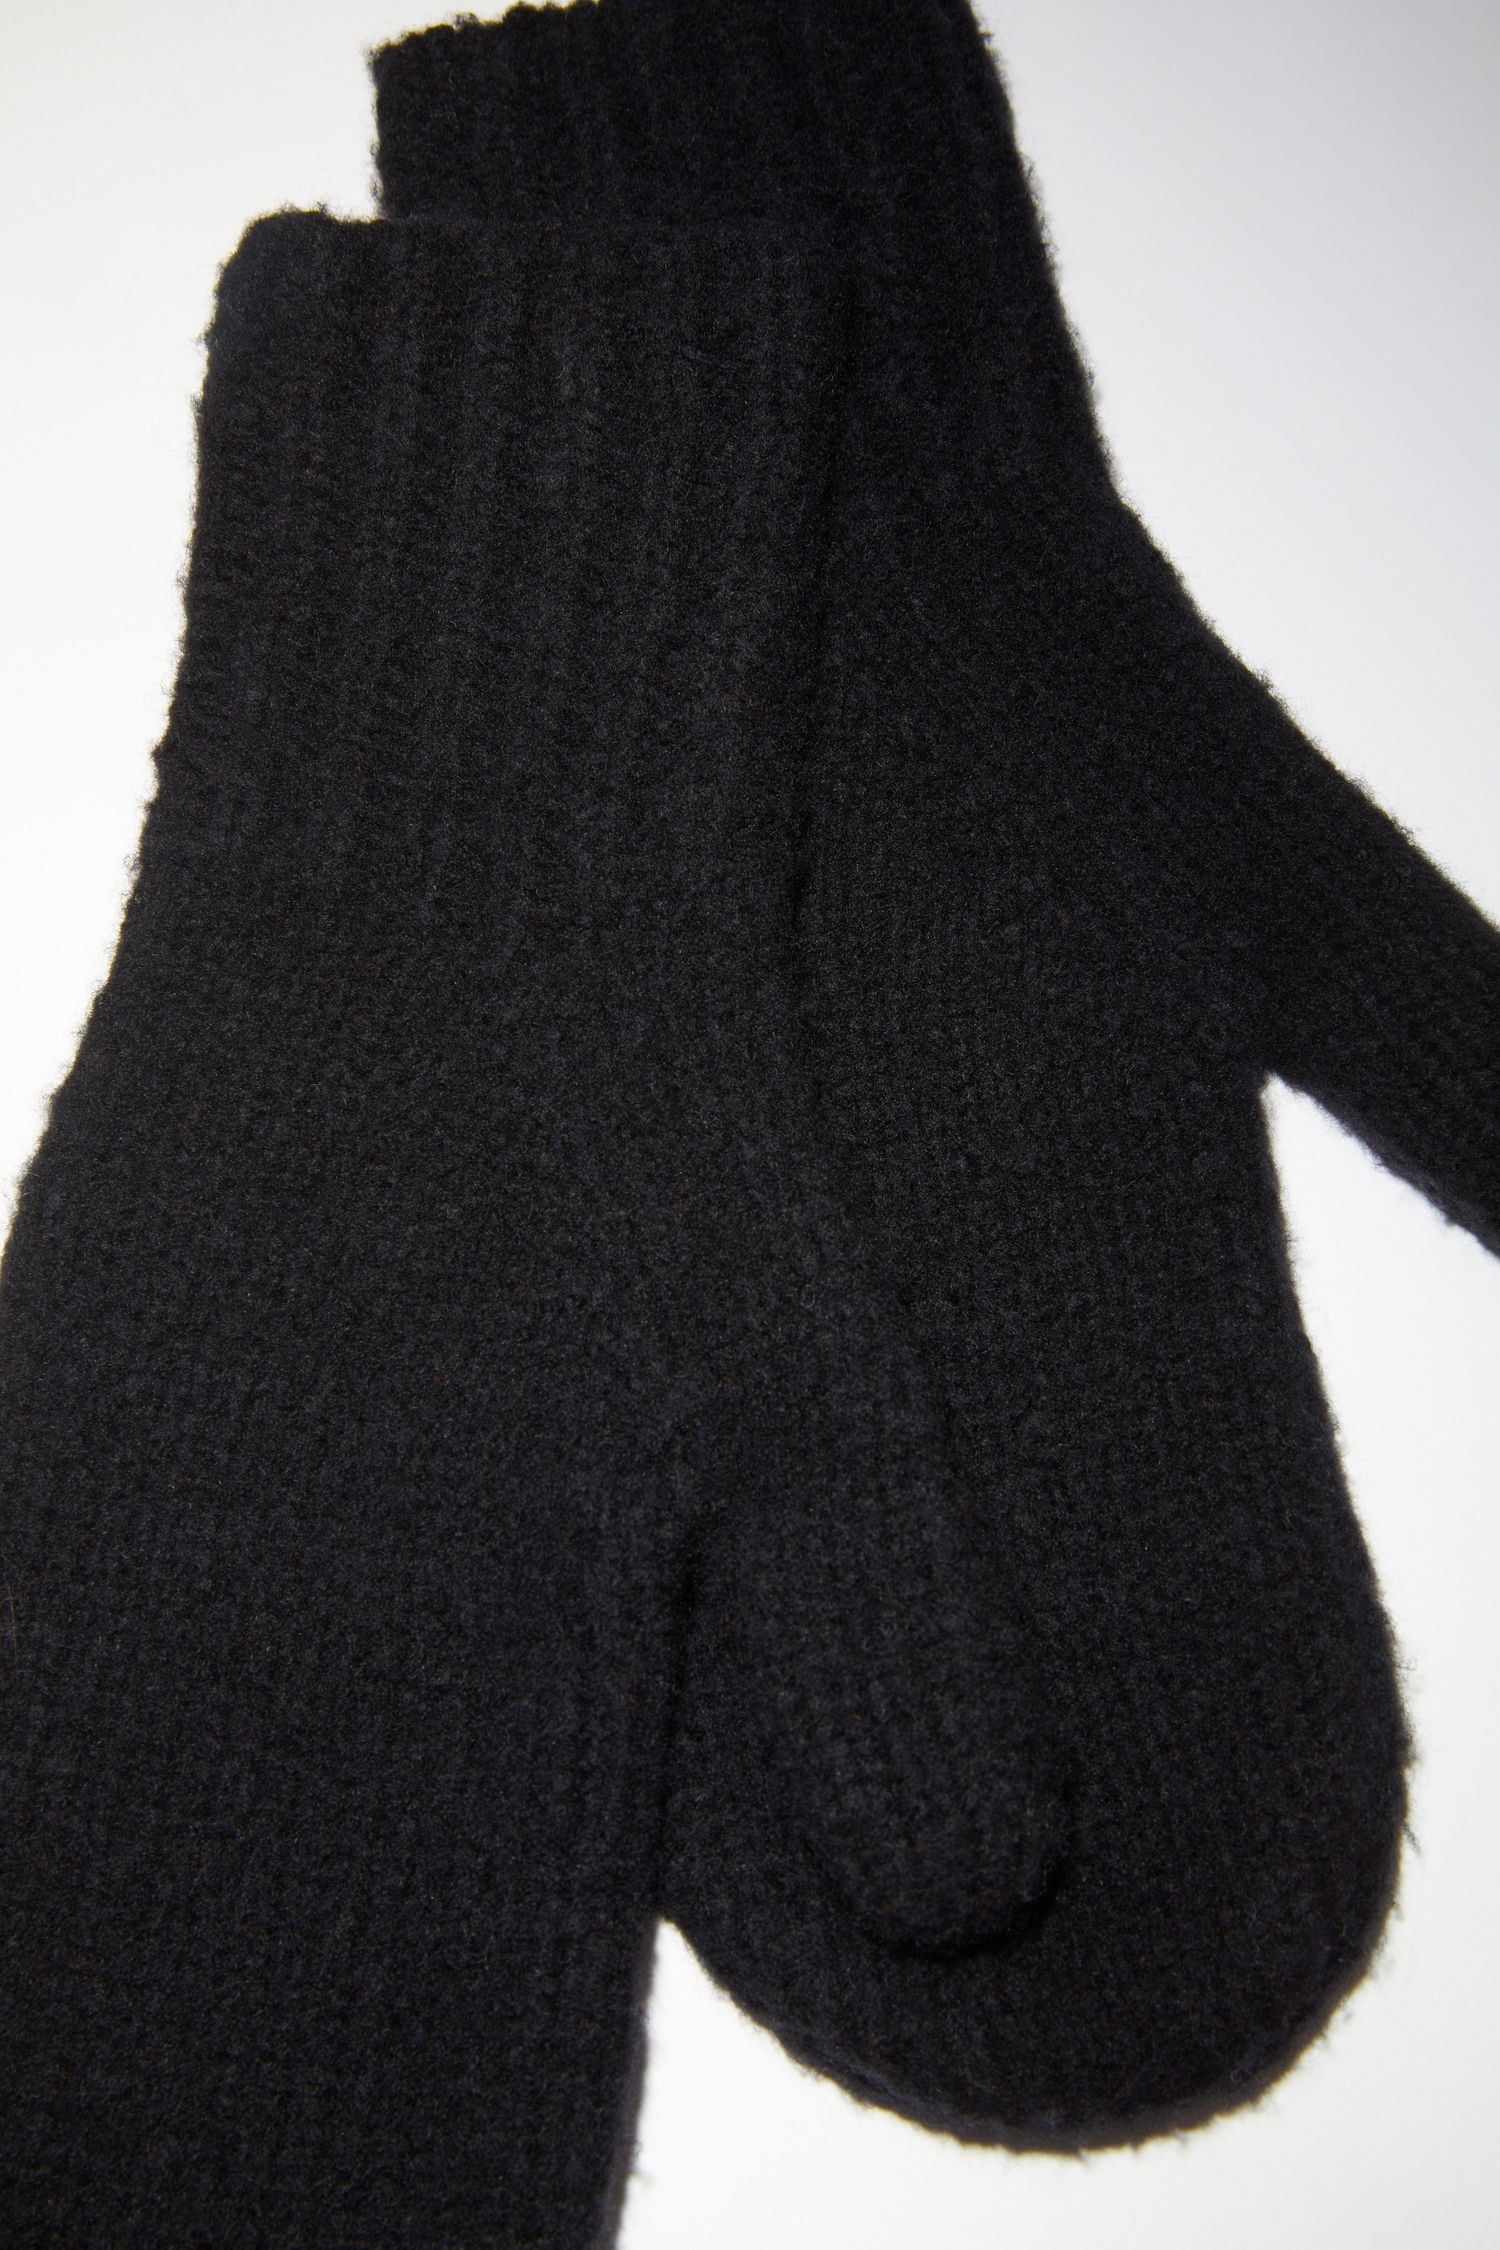 Wool blend mittens - All black - 3